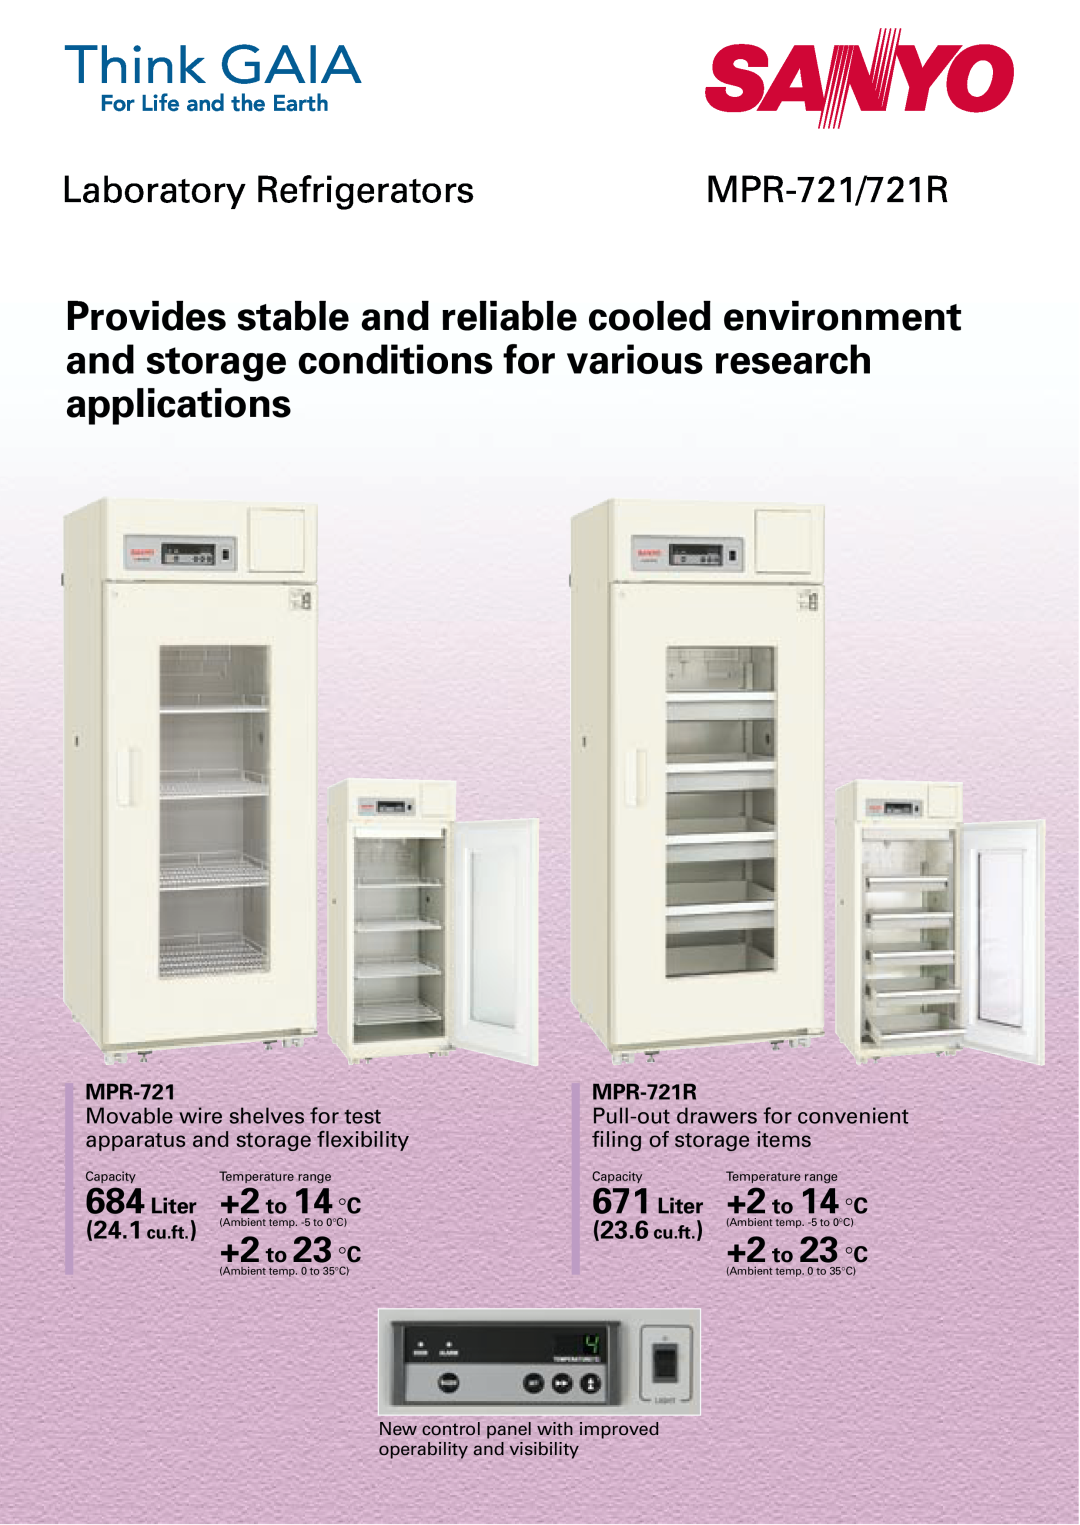 Sanyo manual Laboratory Refrigerators, Liter +2 to 14 C, MPR-721/721R, +2 to 23 C, 24.1 cu.ft, 23.6 cu.ft, MPR-721R 